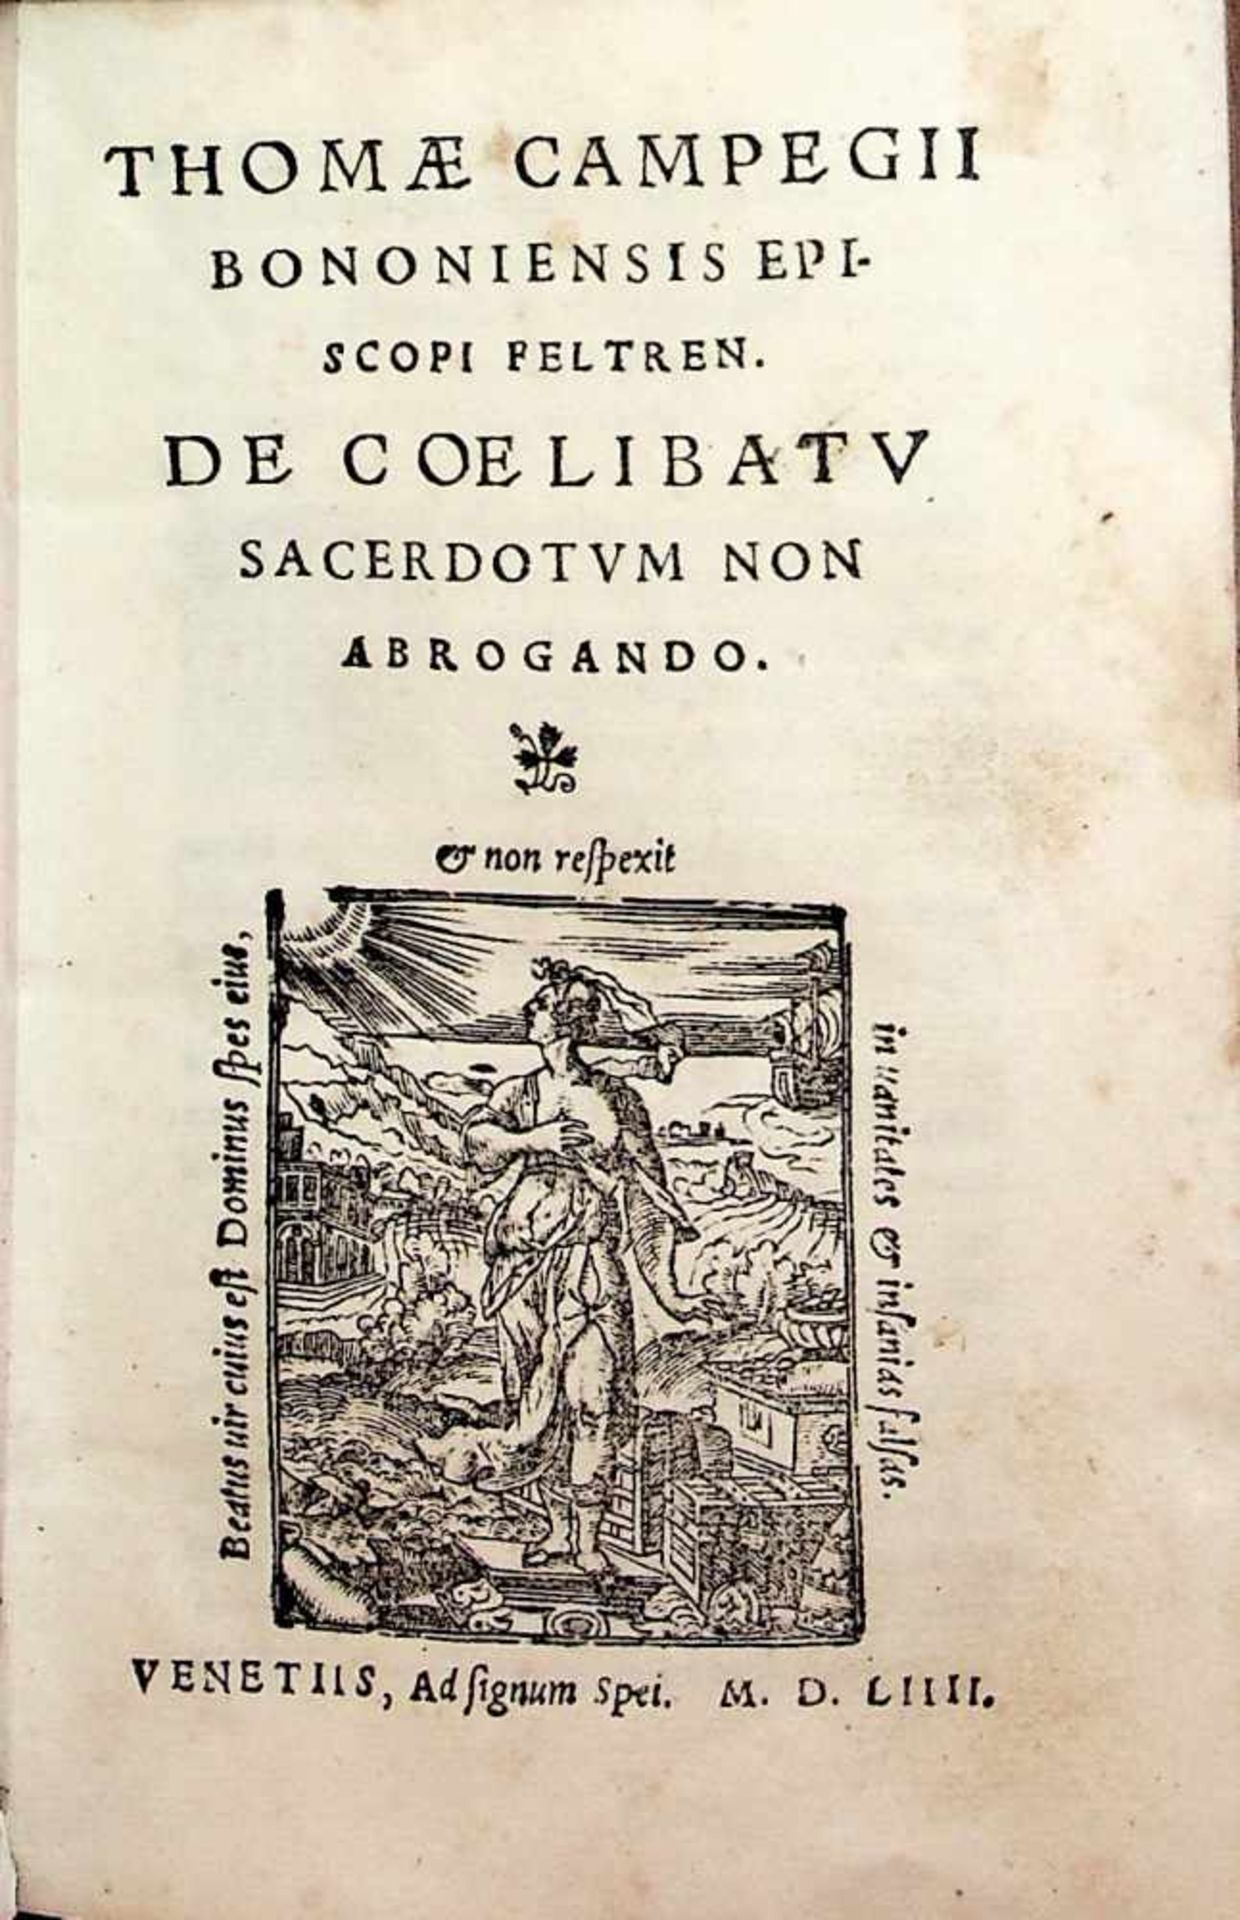 Campeggi, Tommaso.De coelibatv sacerdotvm non abrogando. Venedig,ad signum spei, 1554. 56 unn.